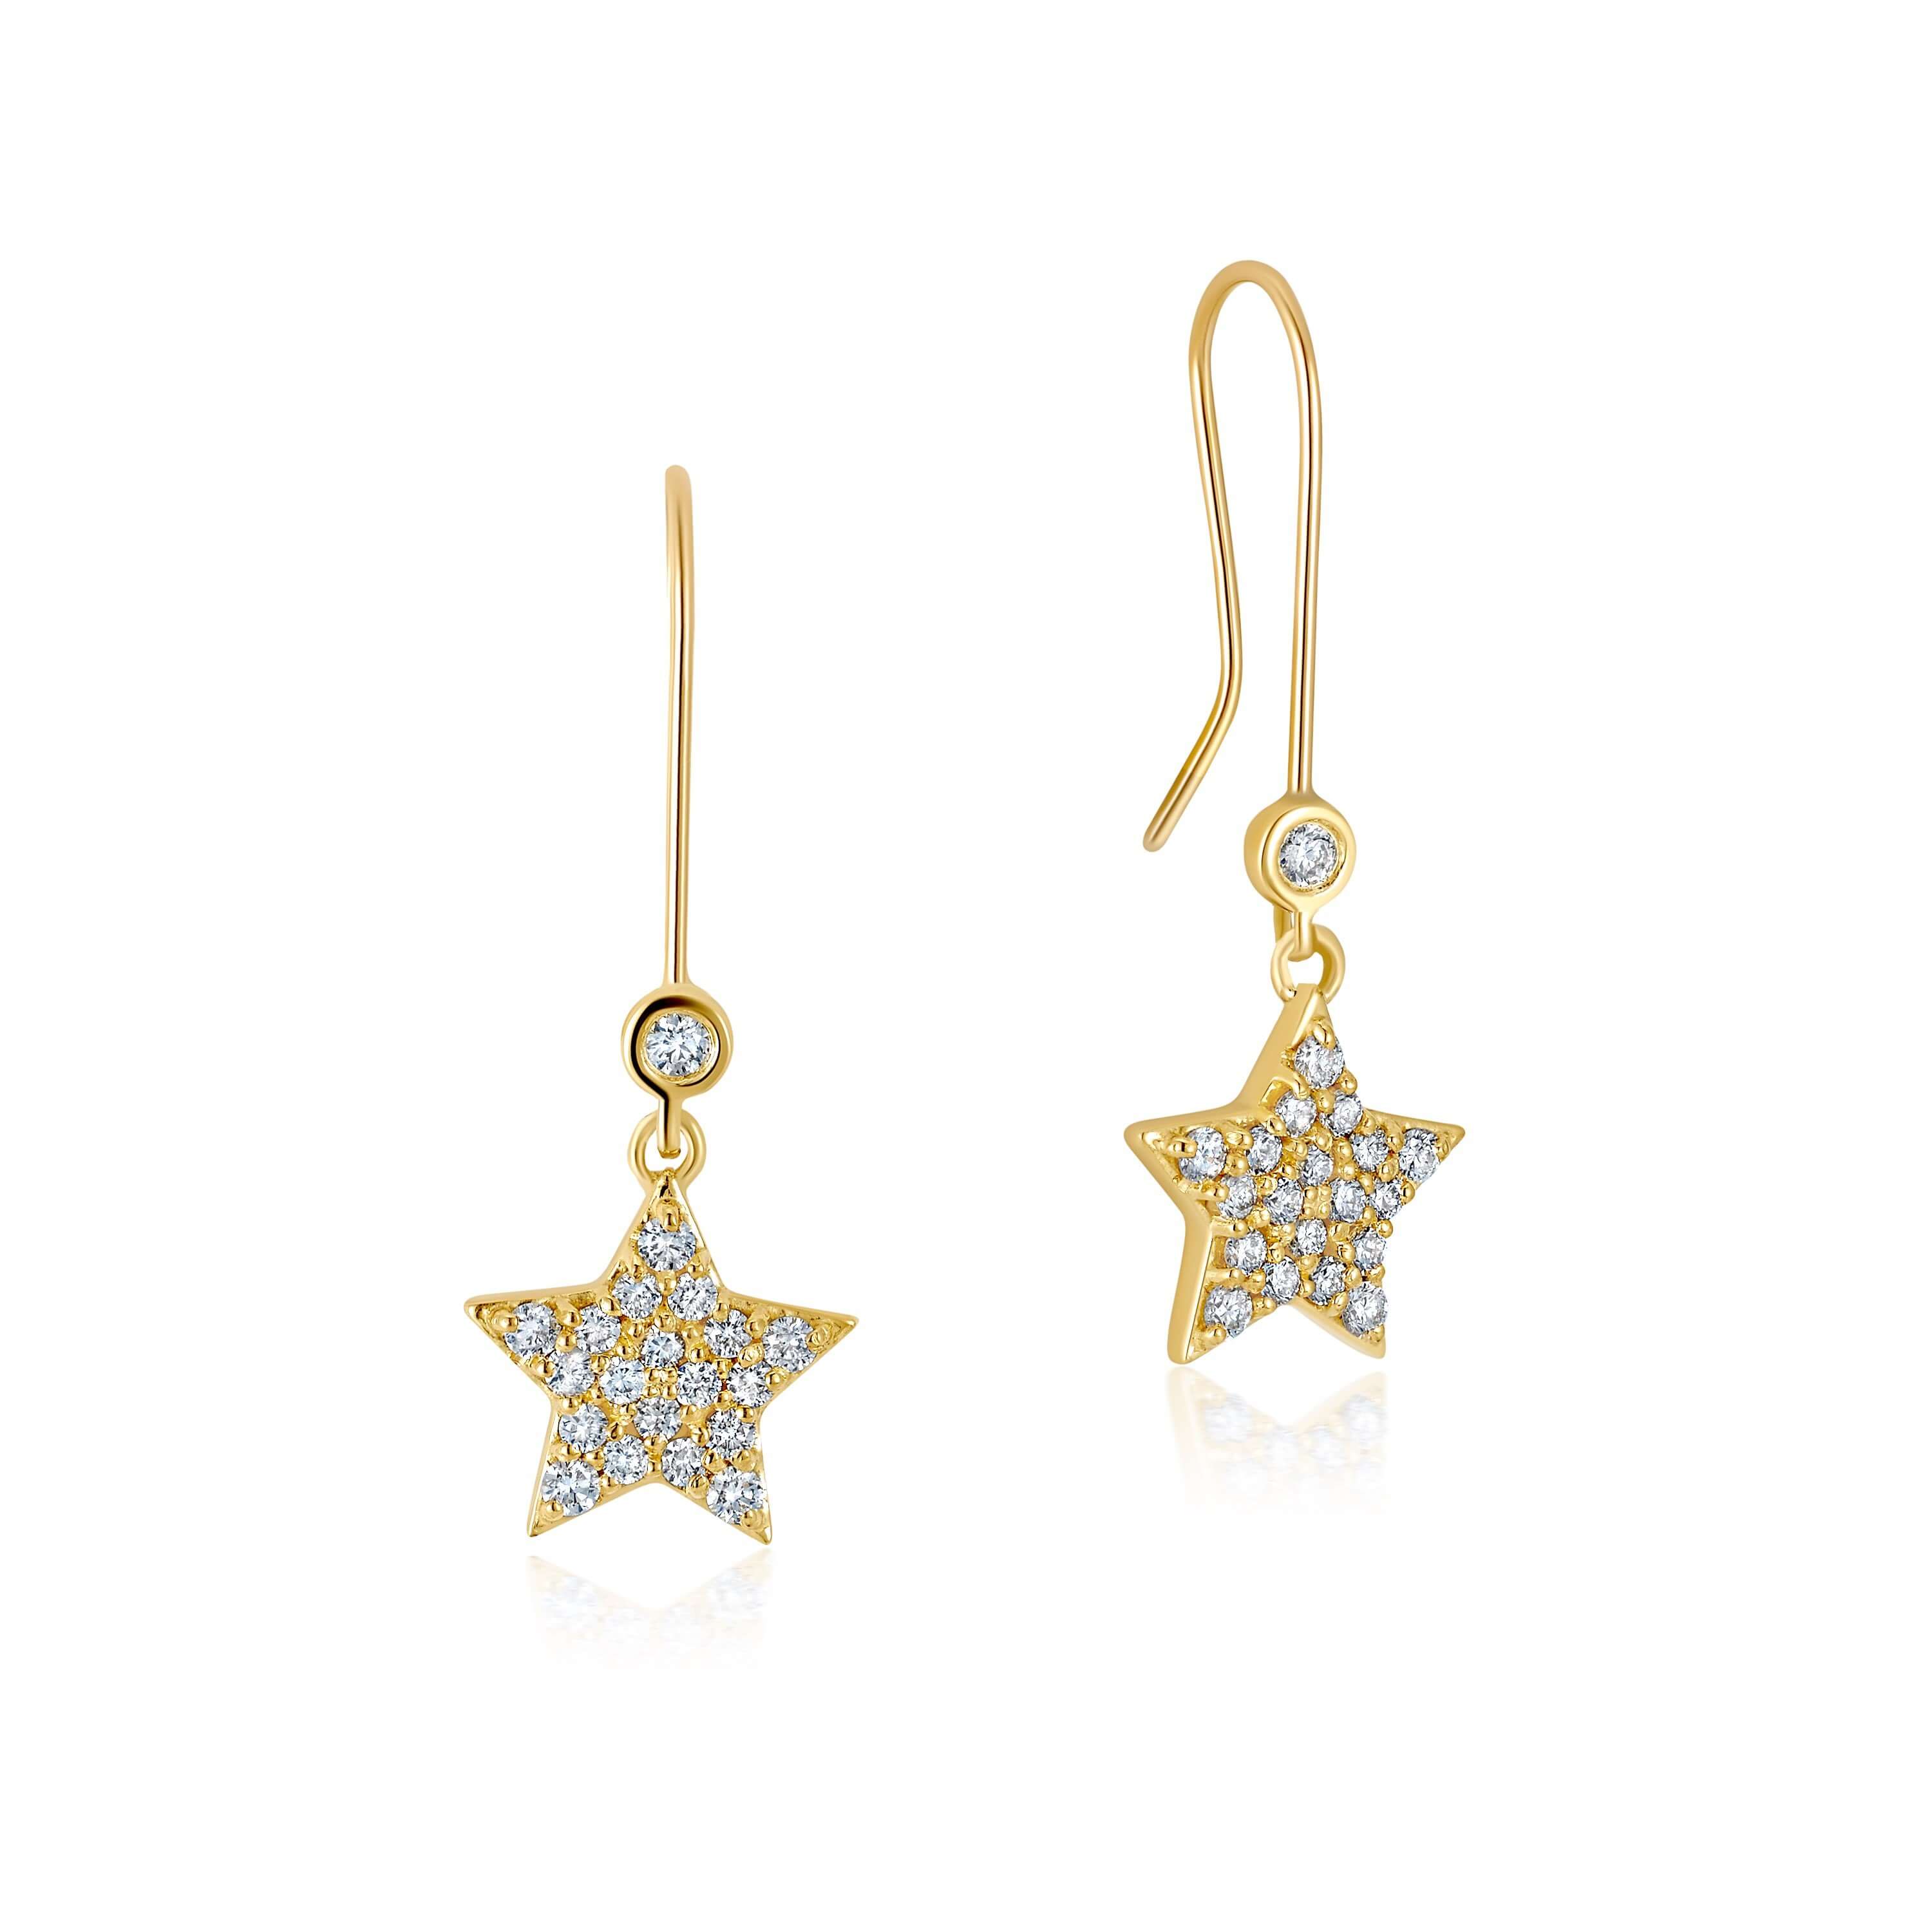 bright earrings inspired by celestial in white diamonds set in 18k yellow gold.